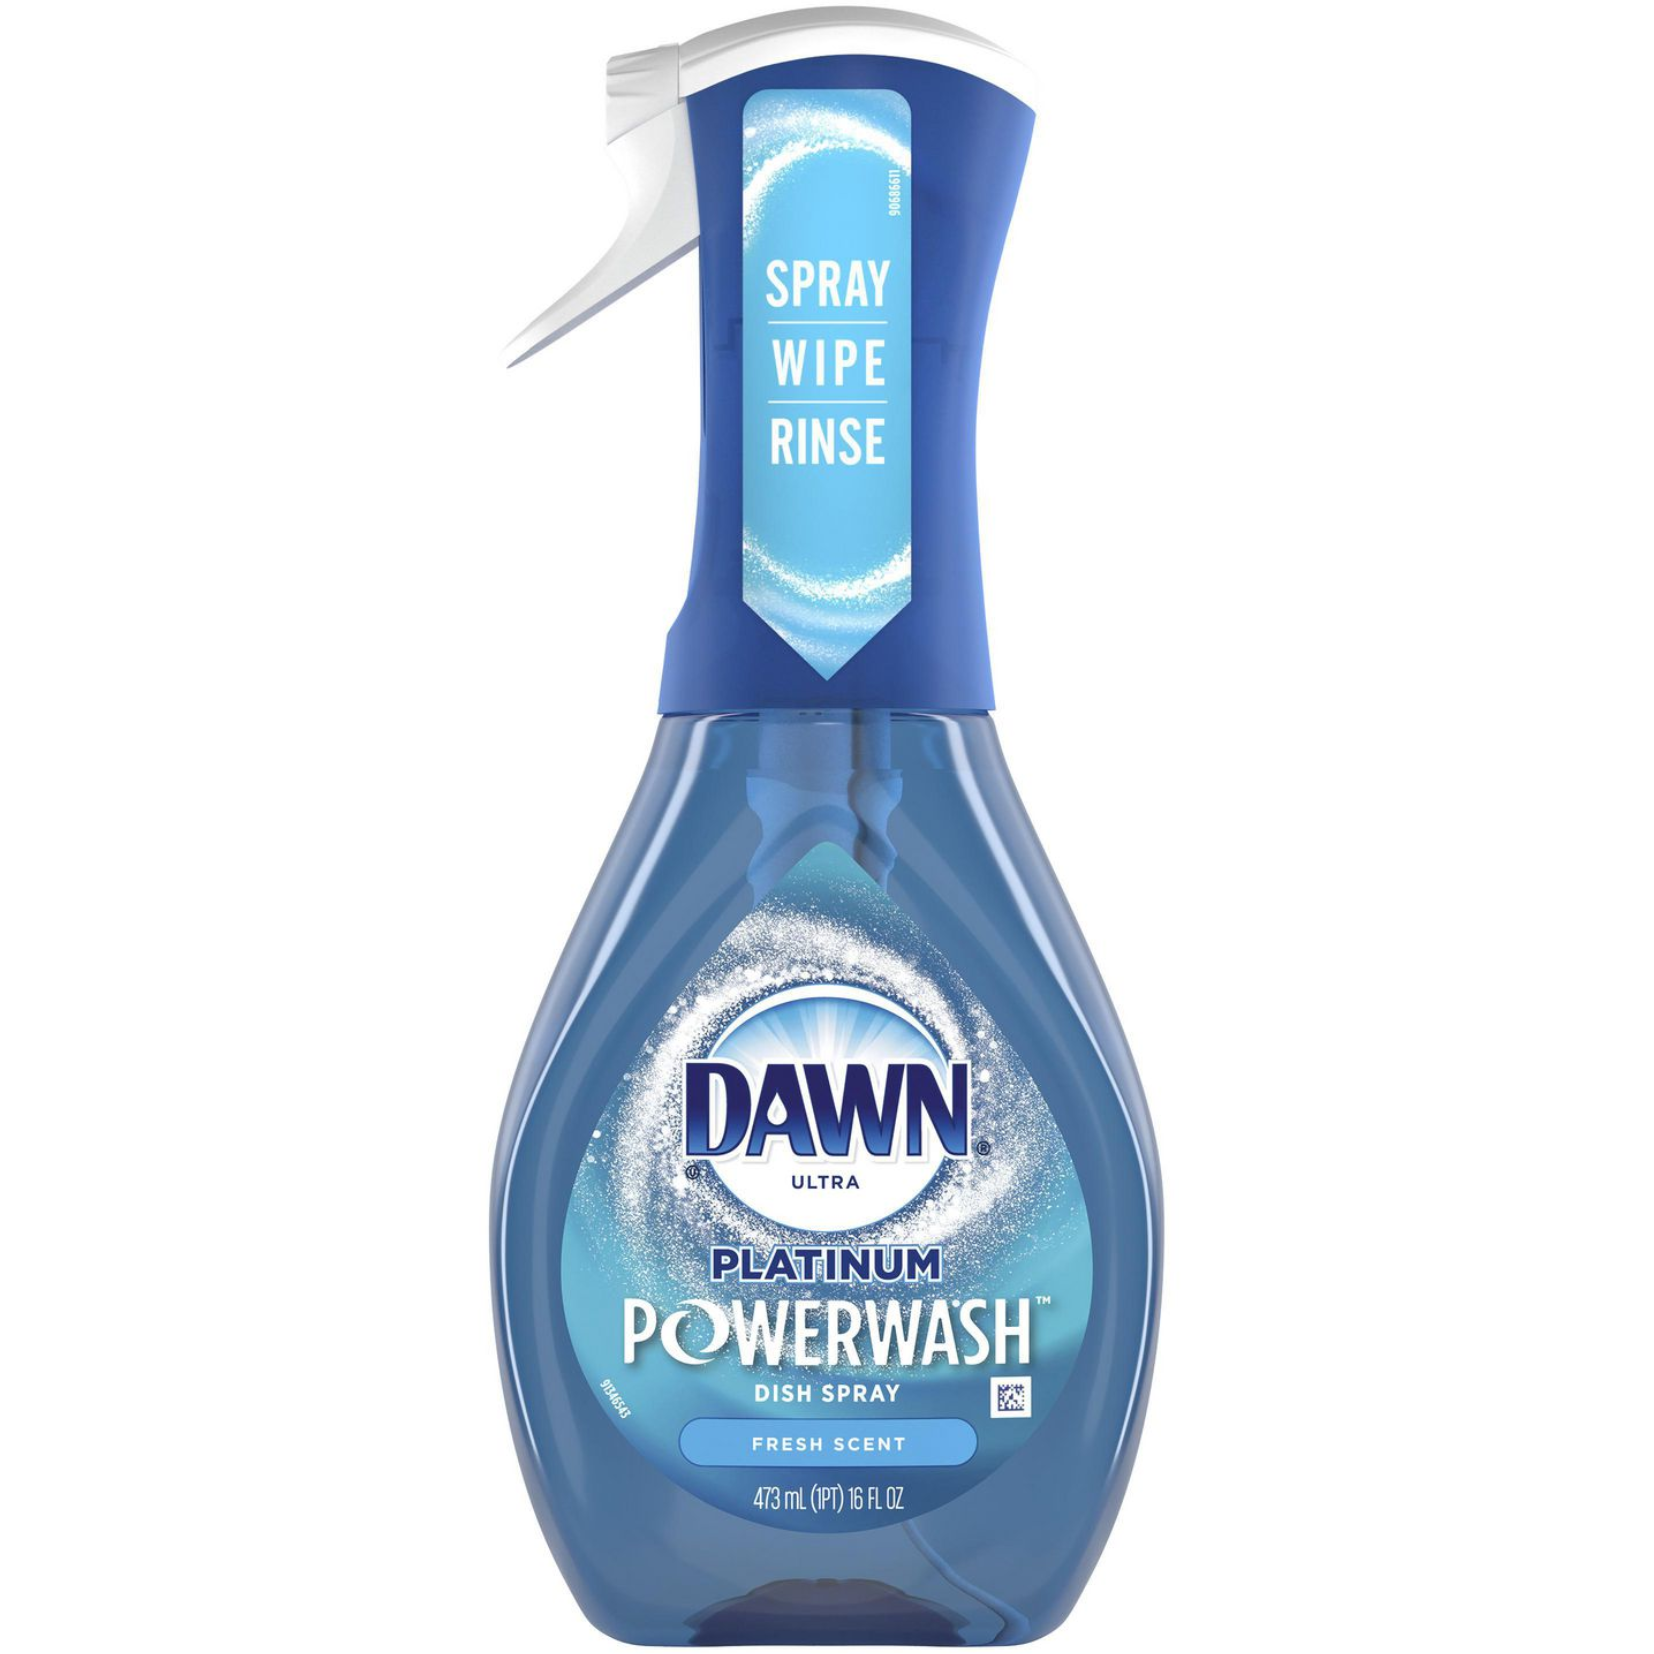 Dawn Platinum Powerwash Dish Spray 473ml x 3